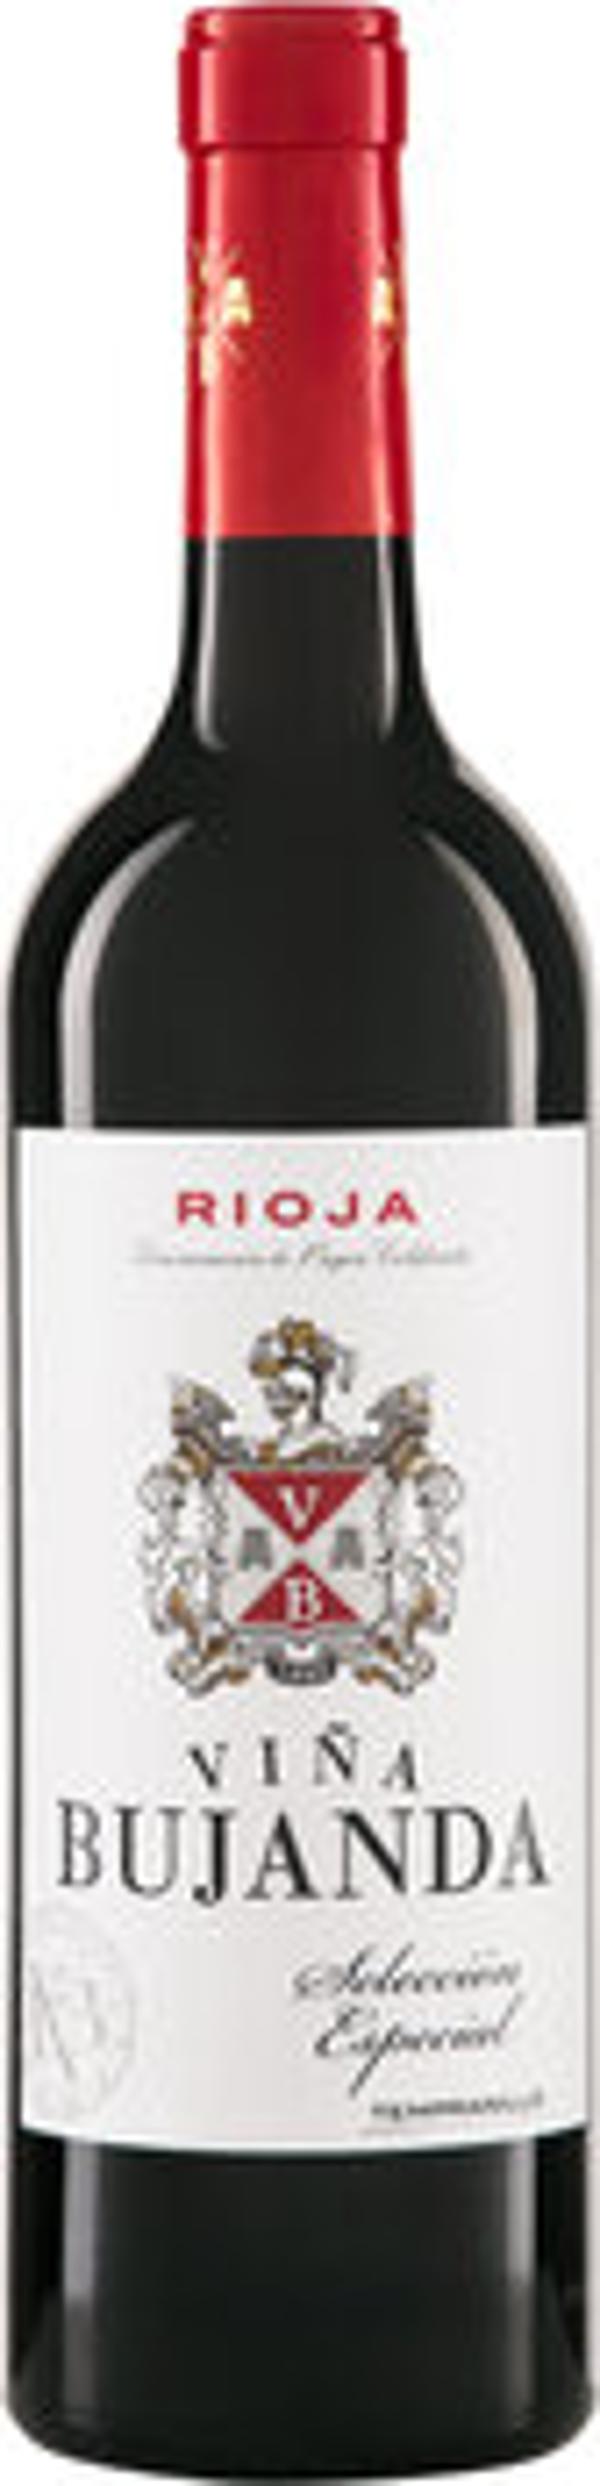 Produktfoto zu VIÑA BUJANDA Tempranillo Rioja D.O.Ca. 2021 Bujanda